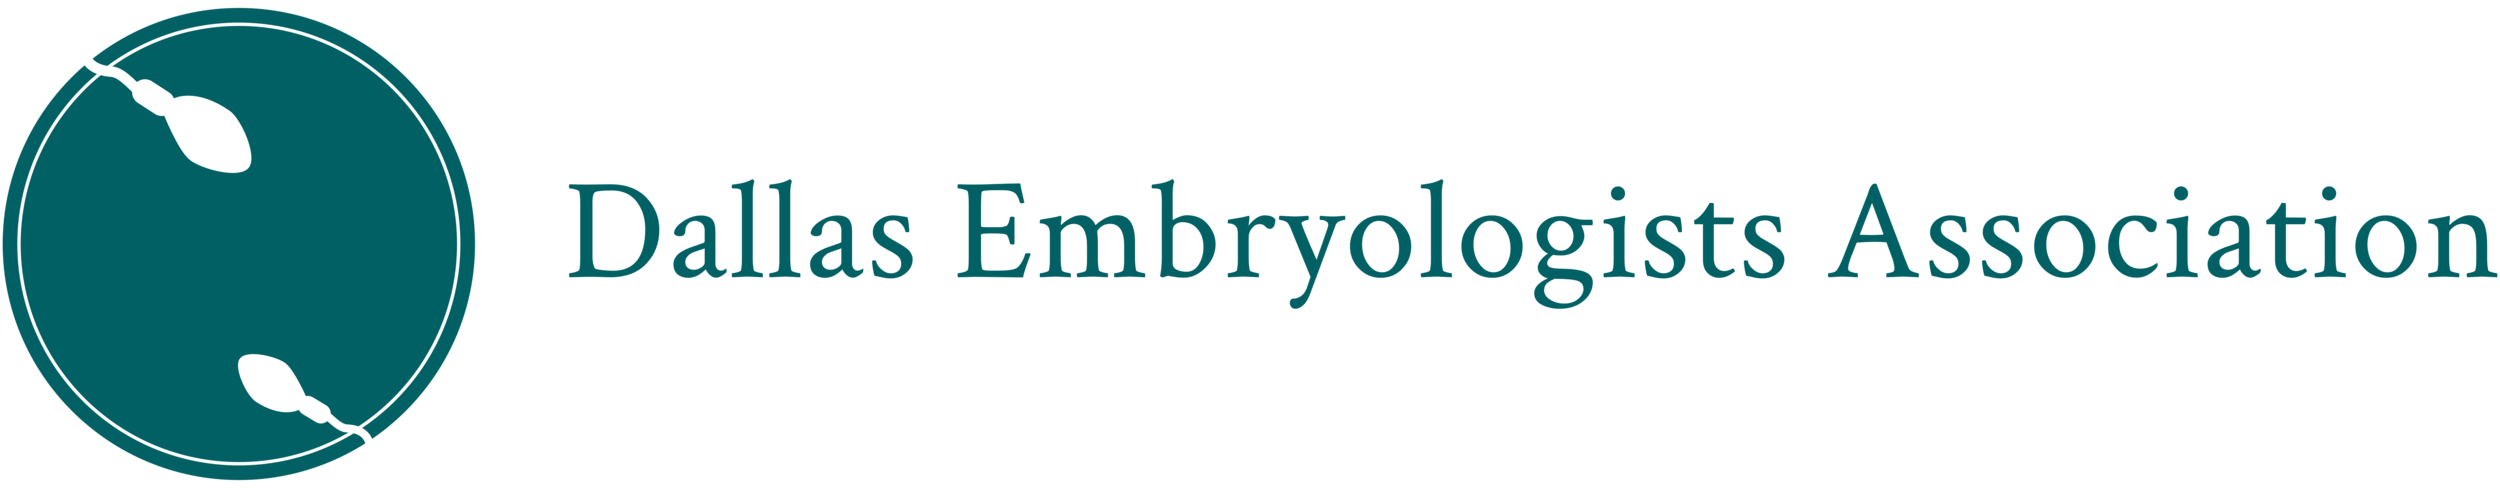 Dallas Embryologists Association